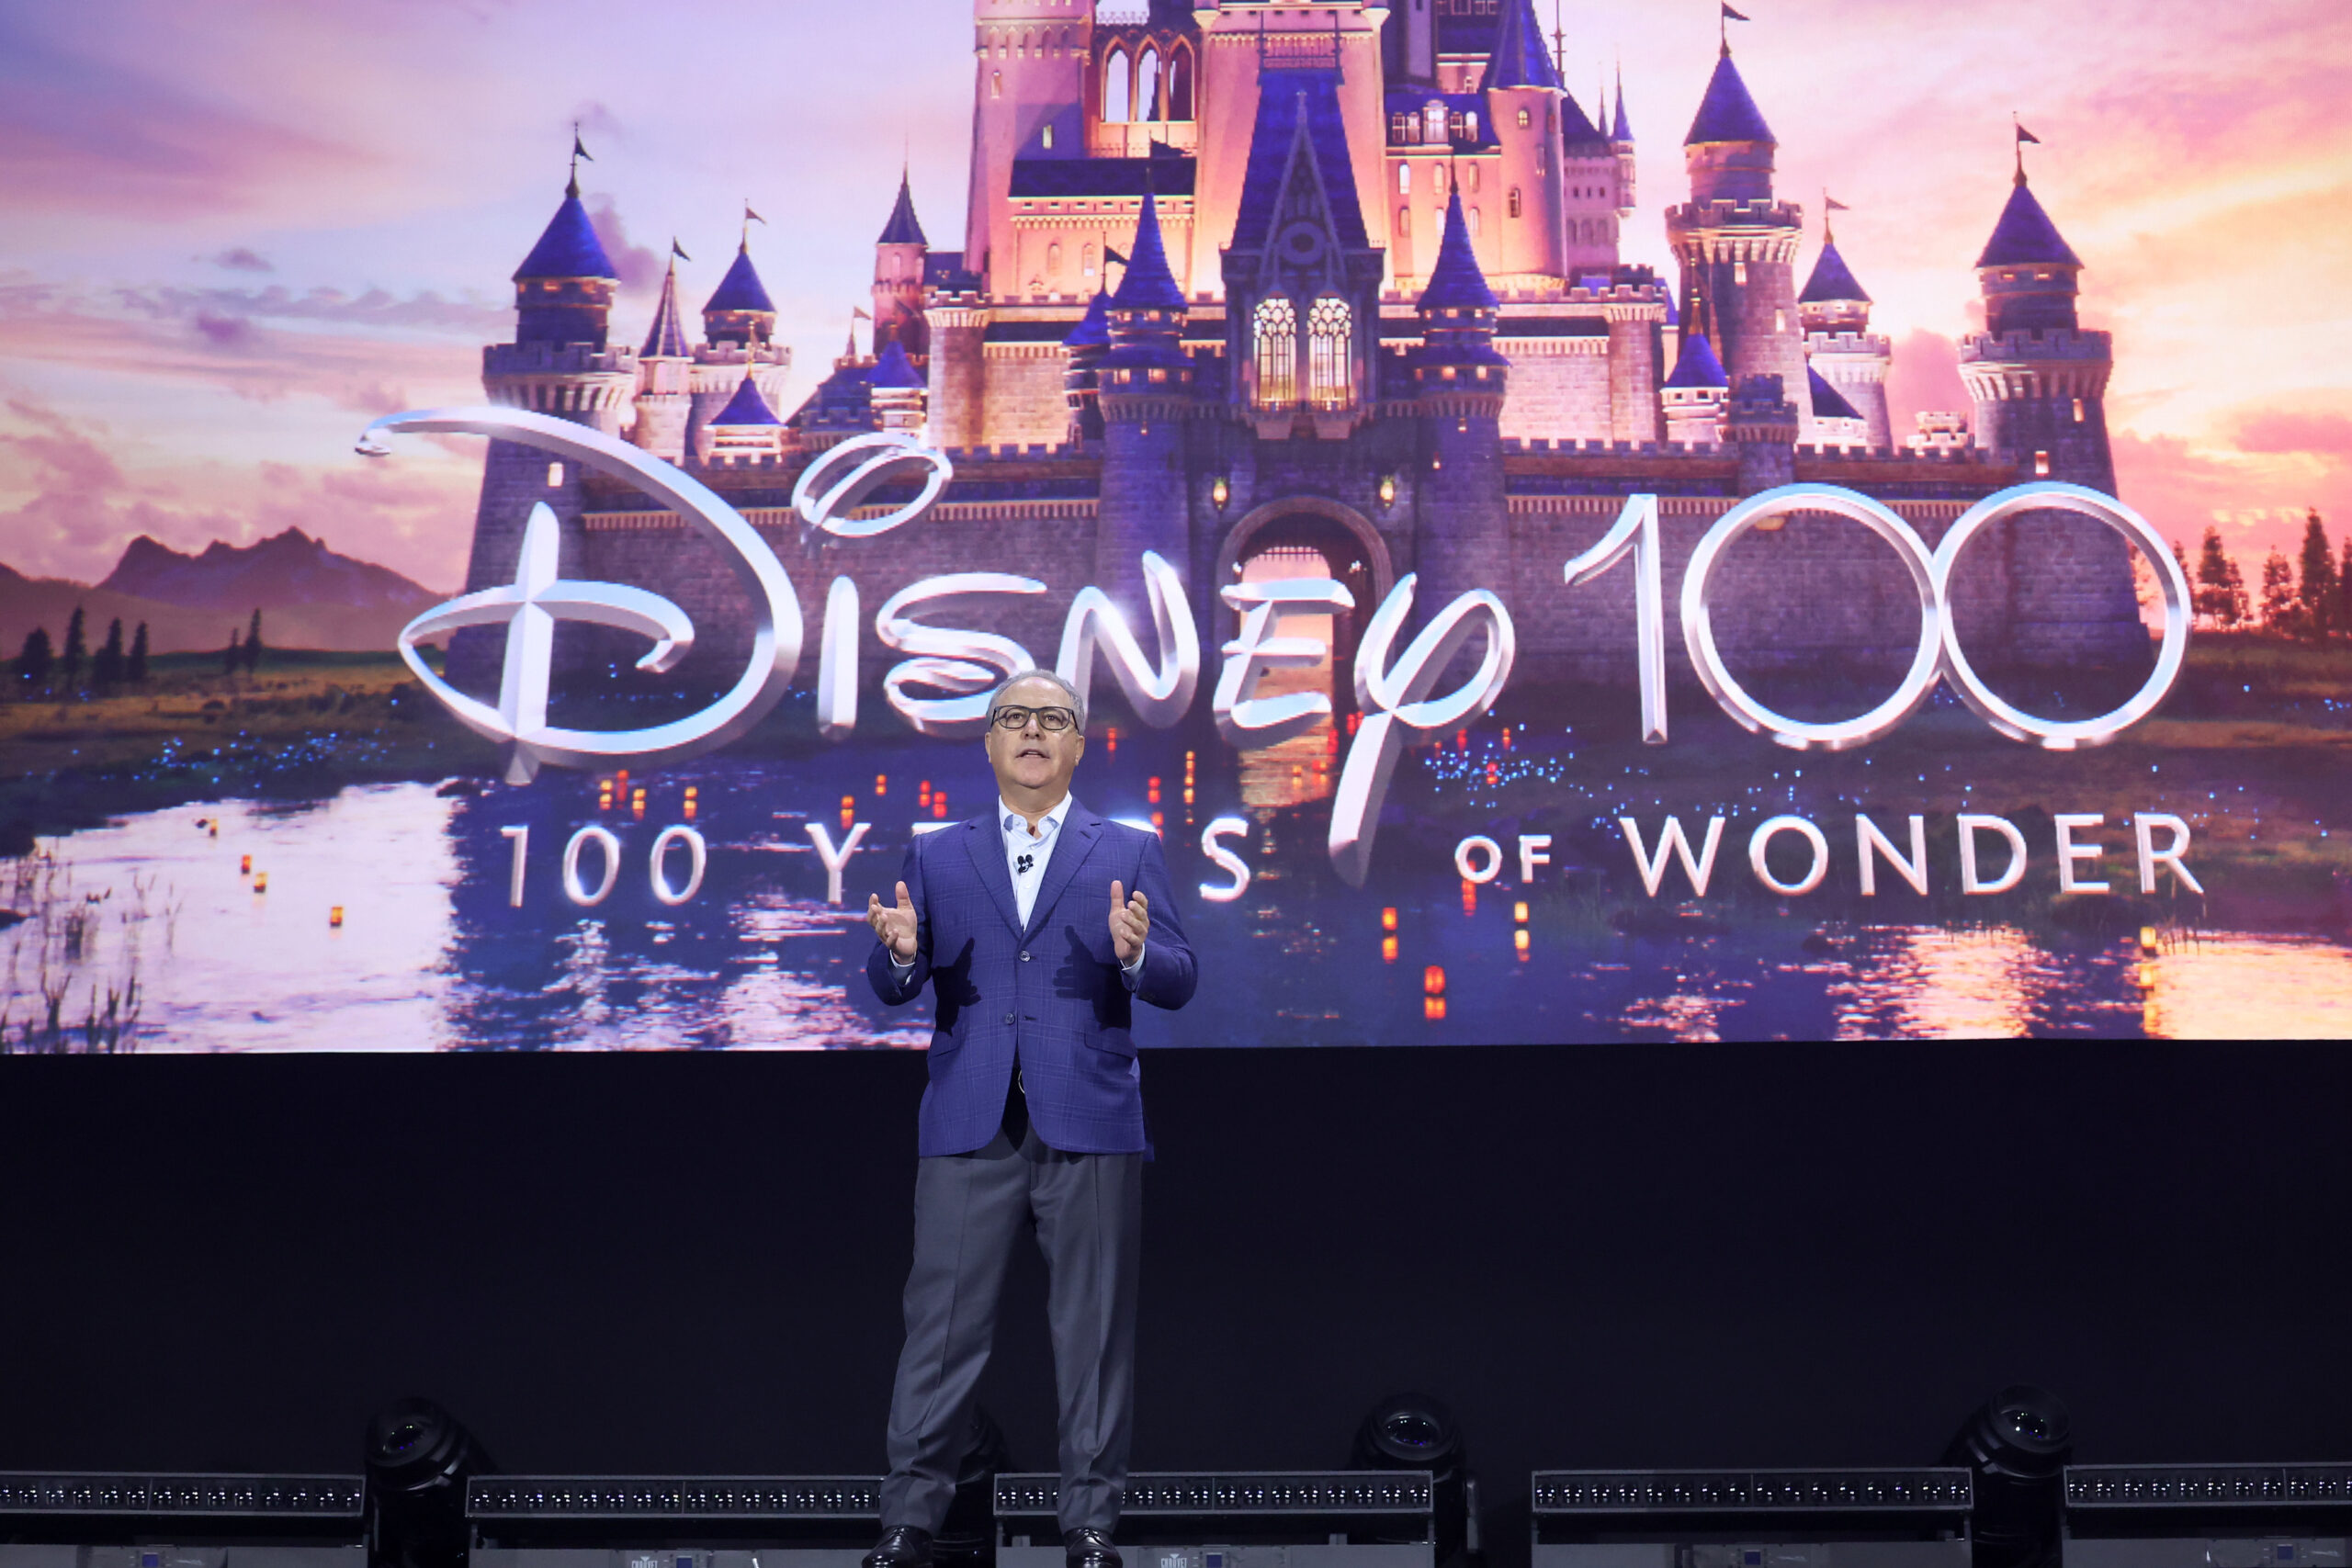 Walt Disney's Frozen Head to be Revealed at D23